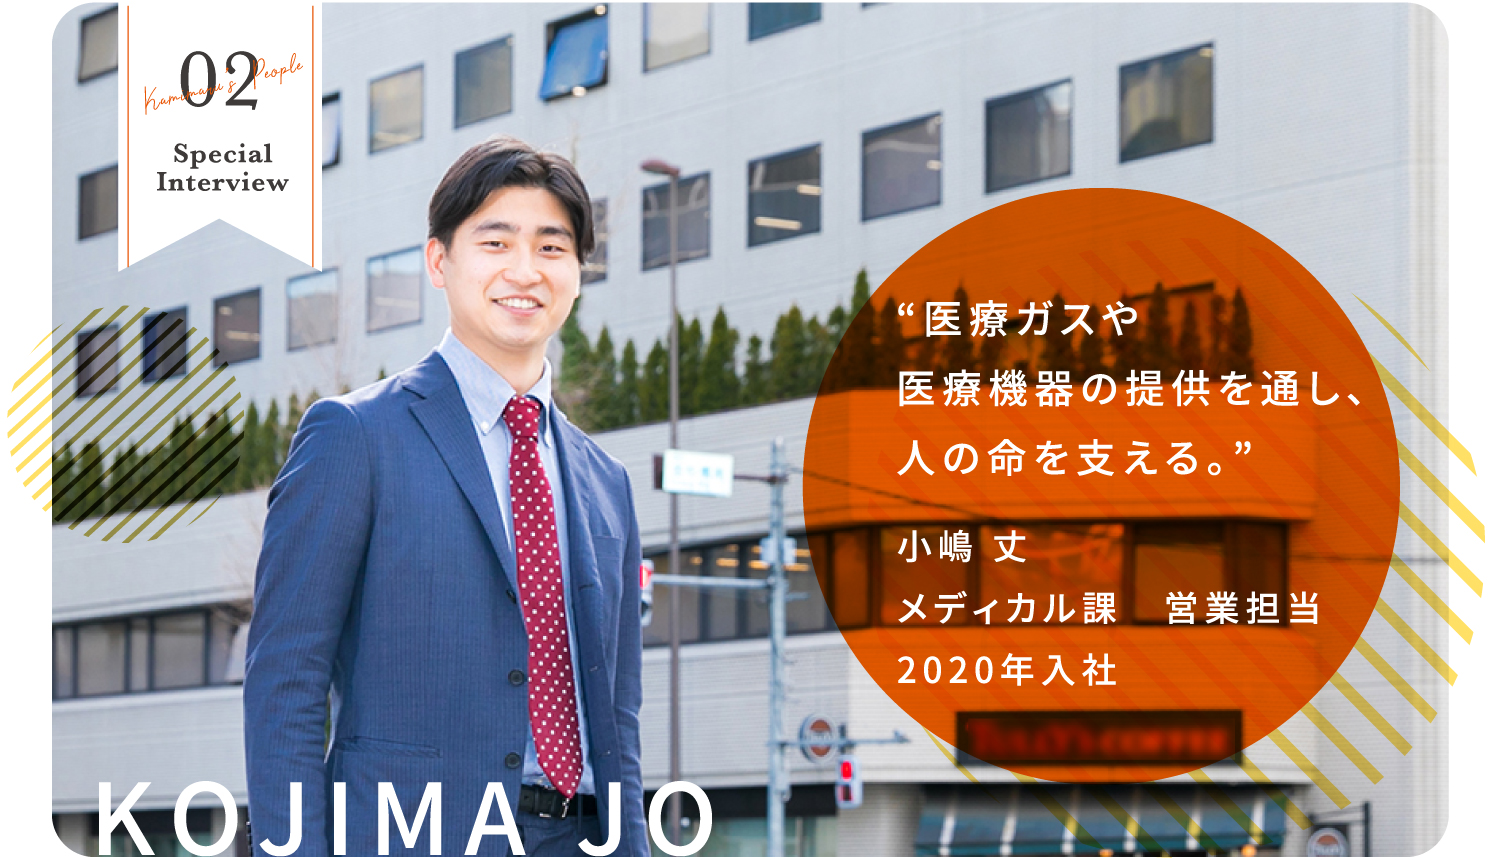 02 Kamimaru's People Special Interview KOJIMA JO “医療ガスや医療機器の提供を通し、人の命を支える。” 小嶋 丈 メディカル課　営業担当 2020年入社